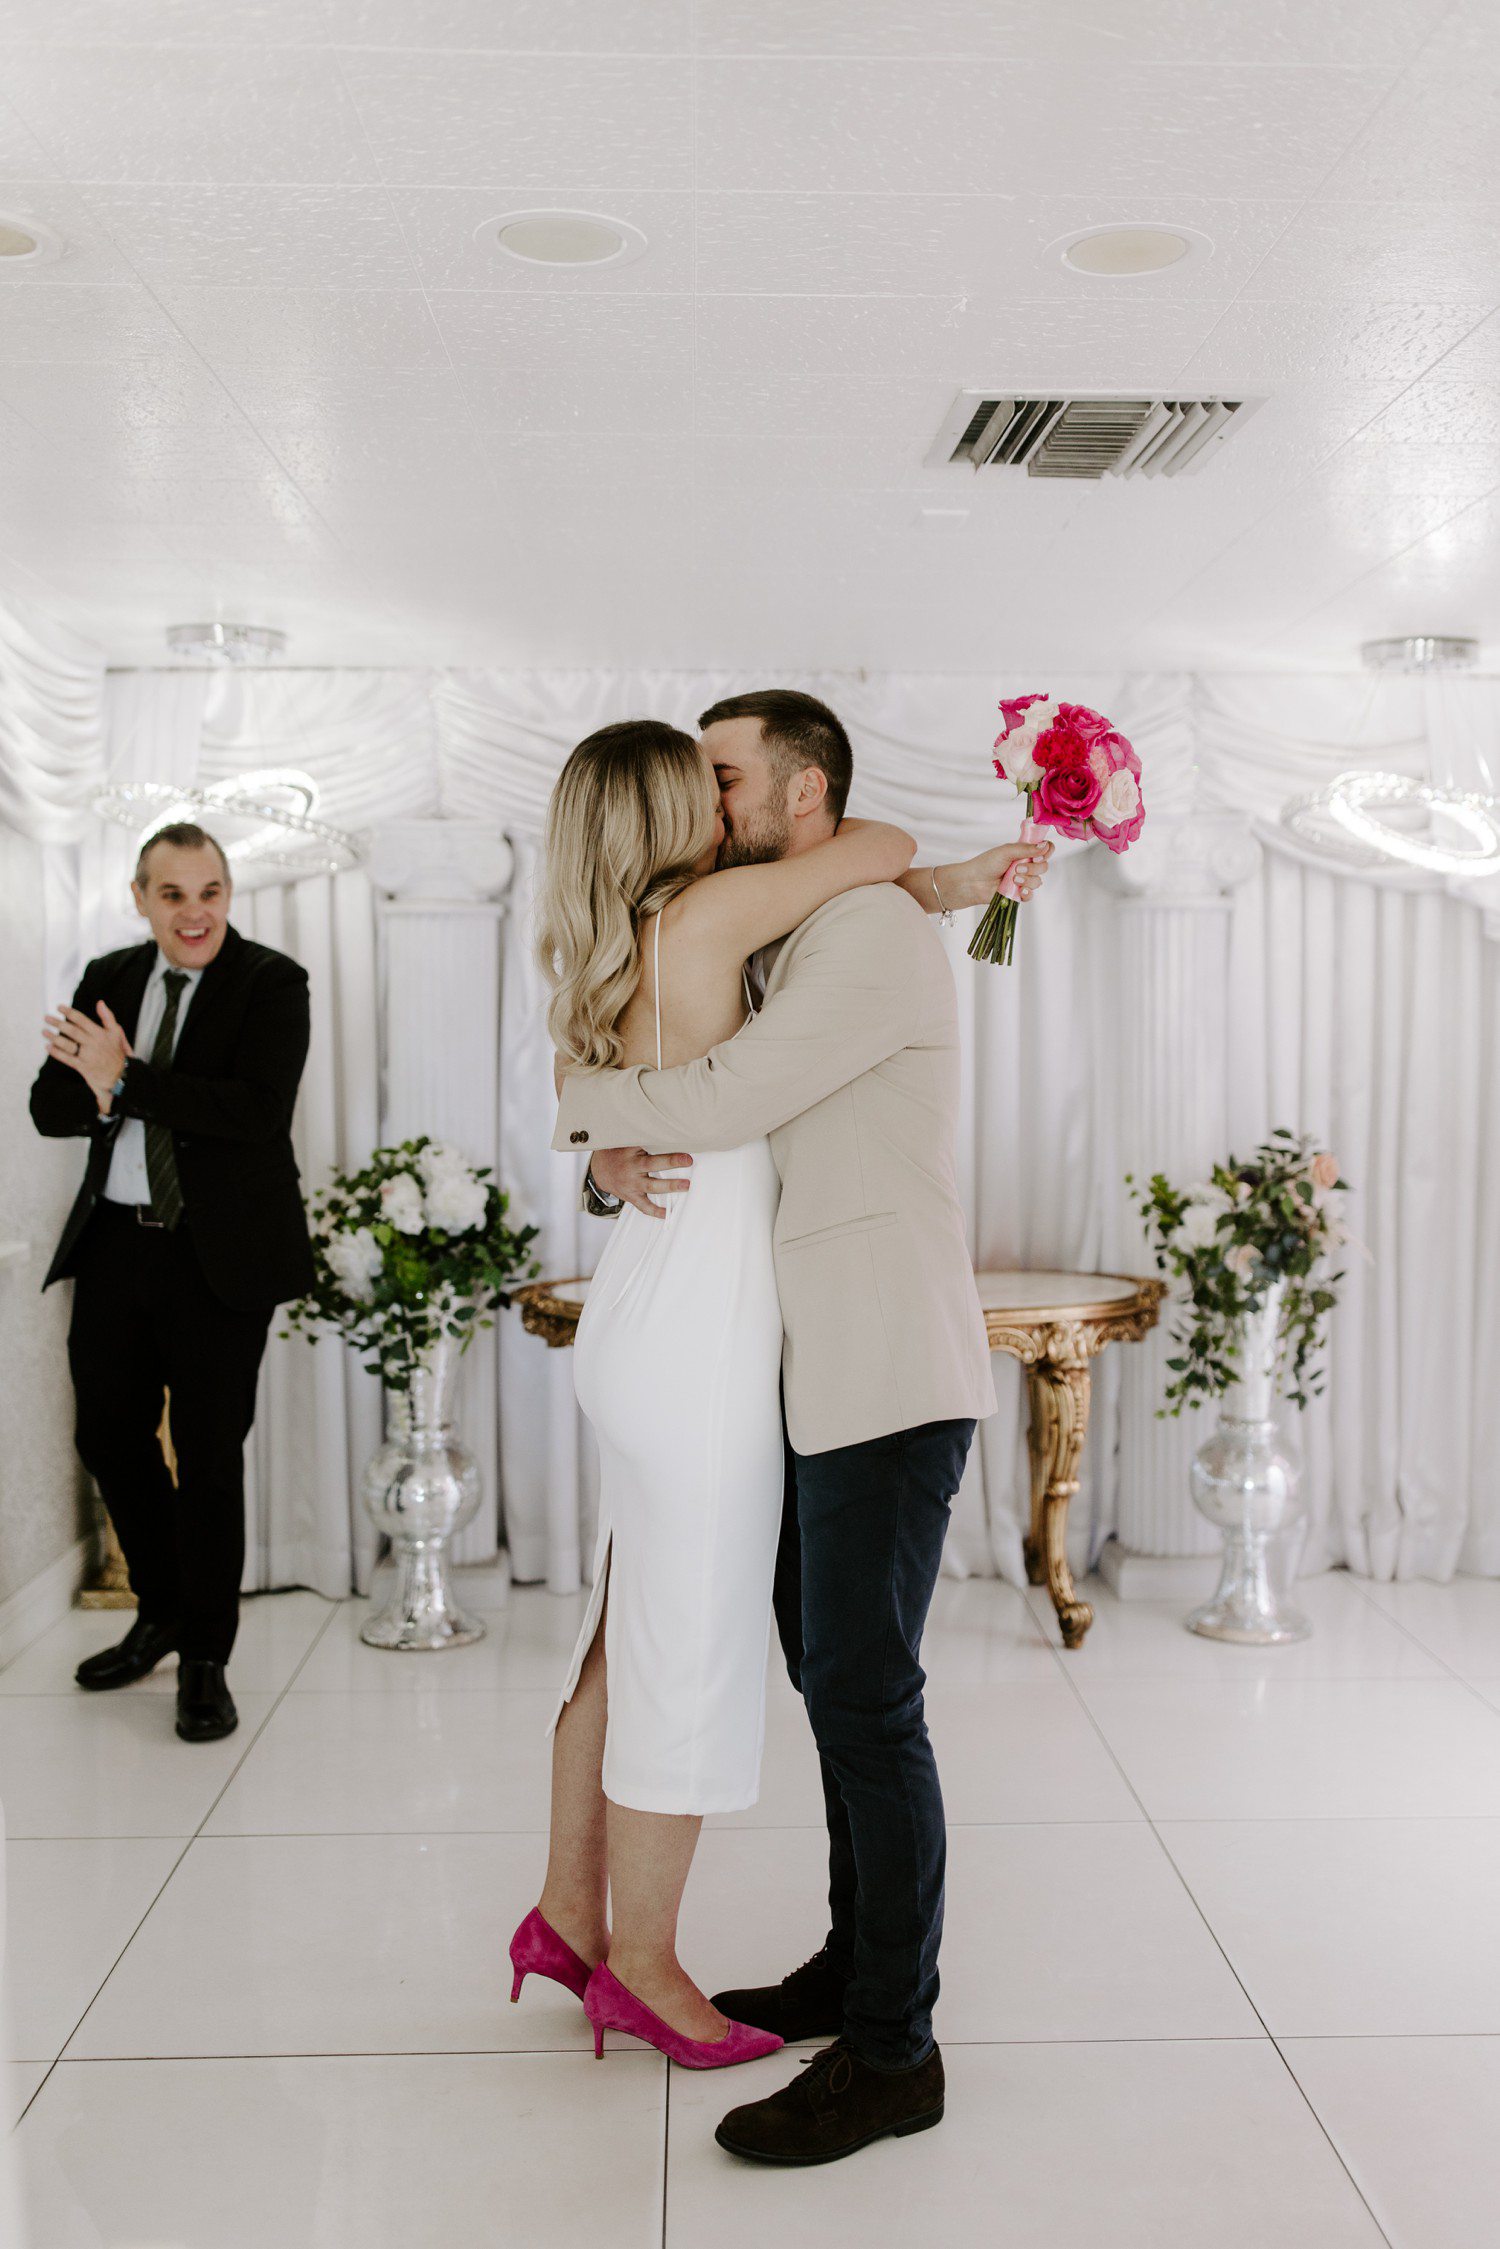 Just married kiss at wedding chapel in Las Vegas.